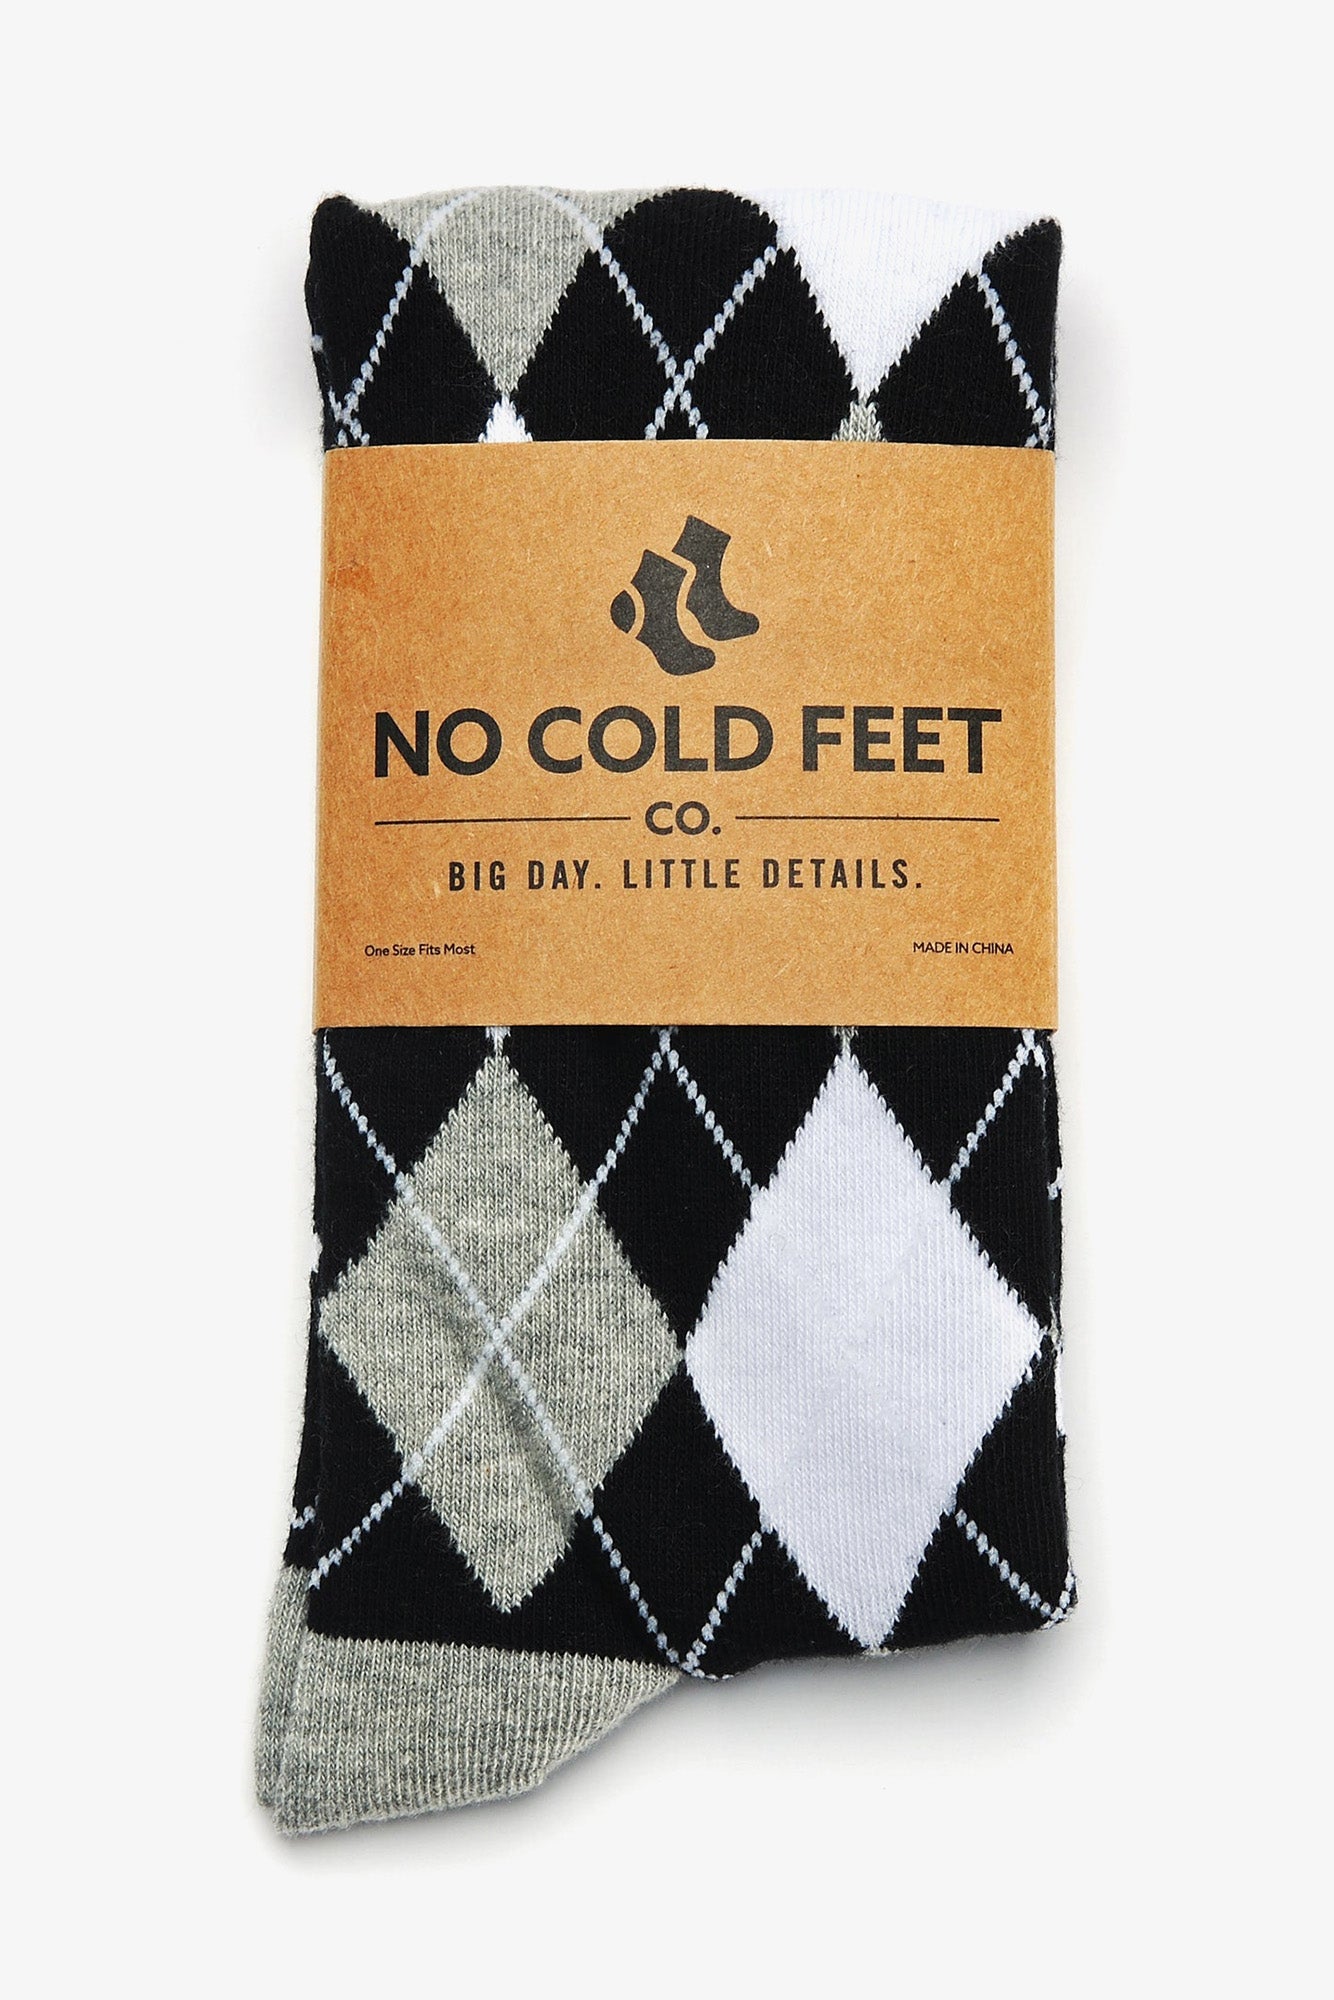 Black and White Argyle Groomsmen Socks by No Cold Feet